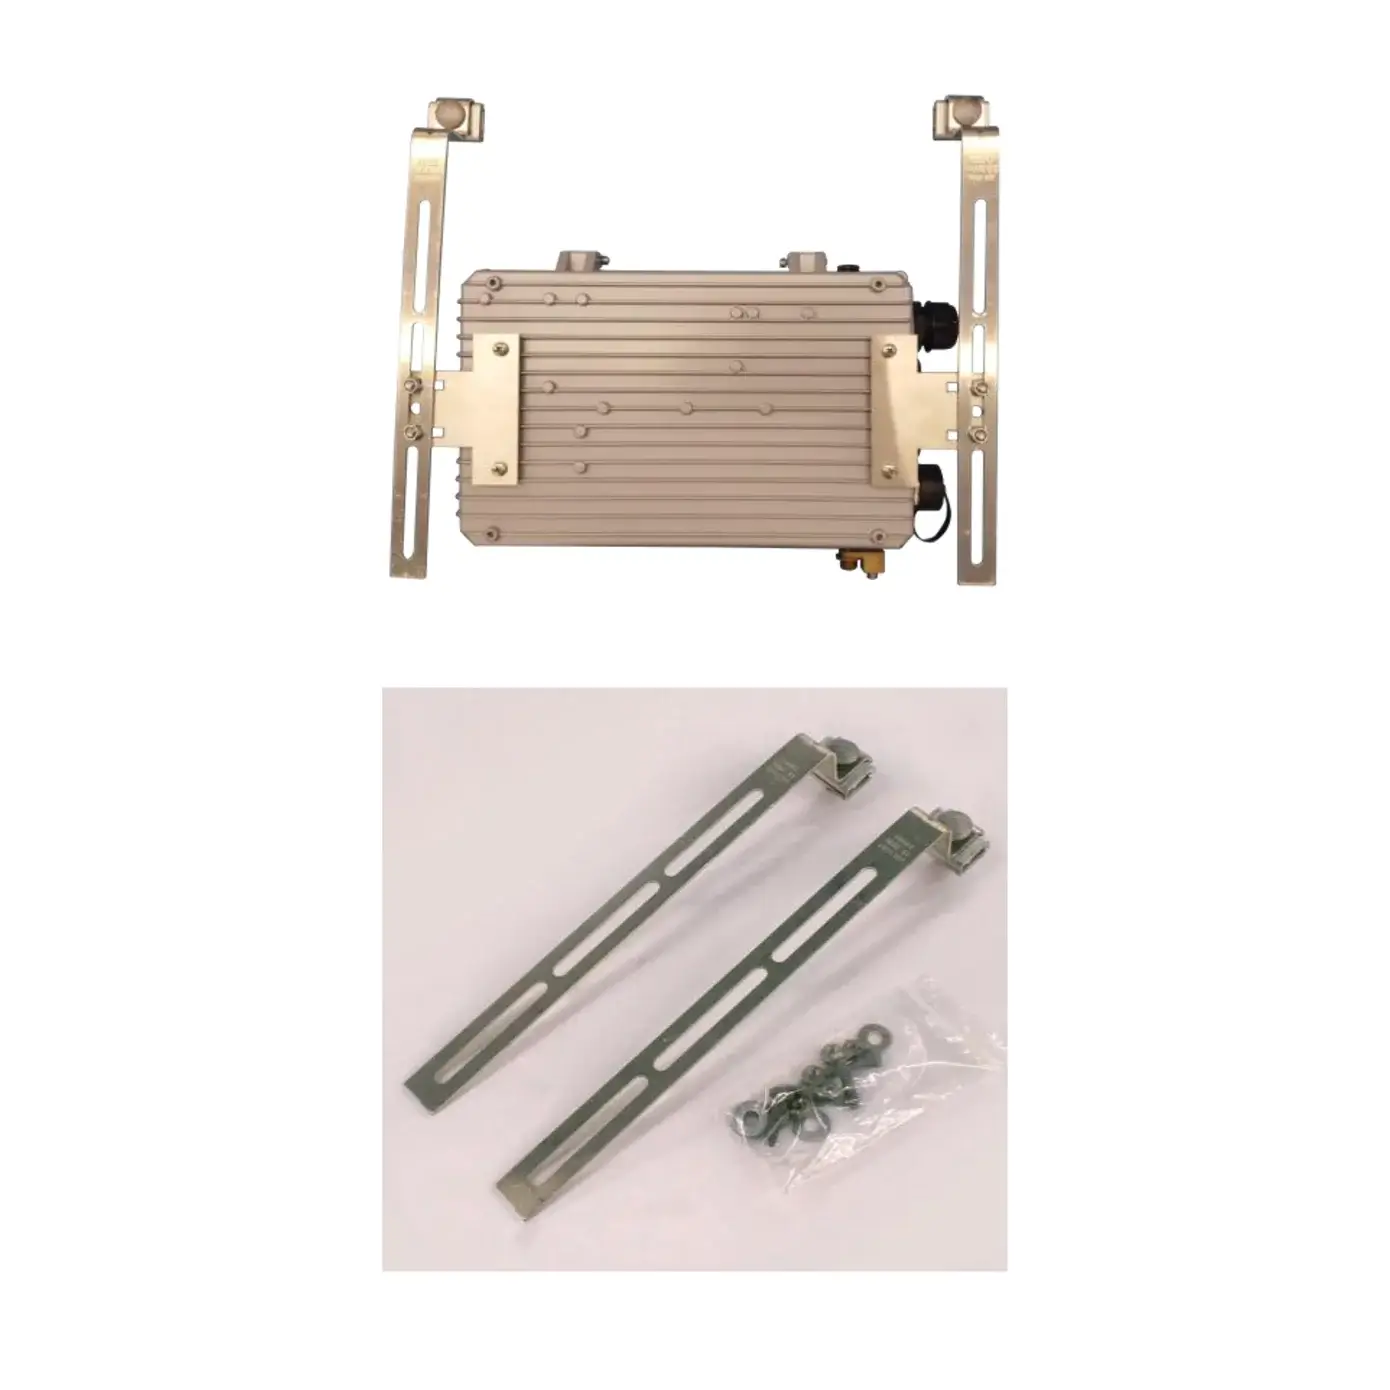 Original Image: Positron – Strand-mounting kit for outdoor GAM-M & GAM-C Models